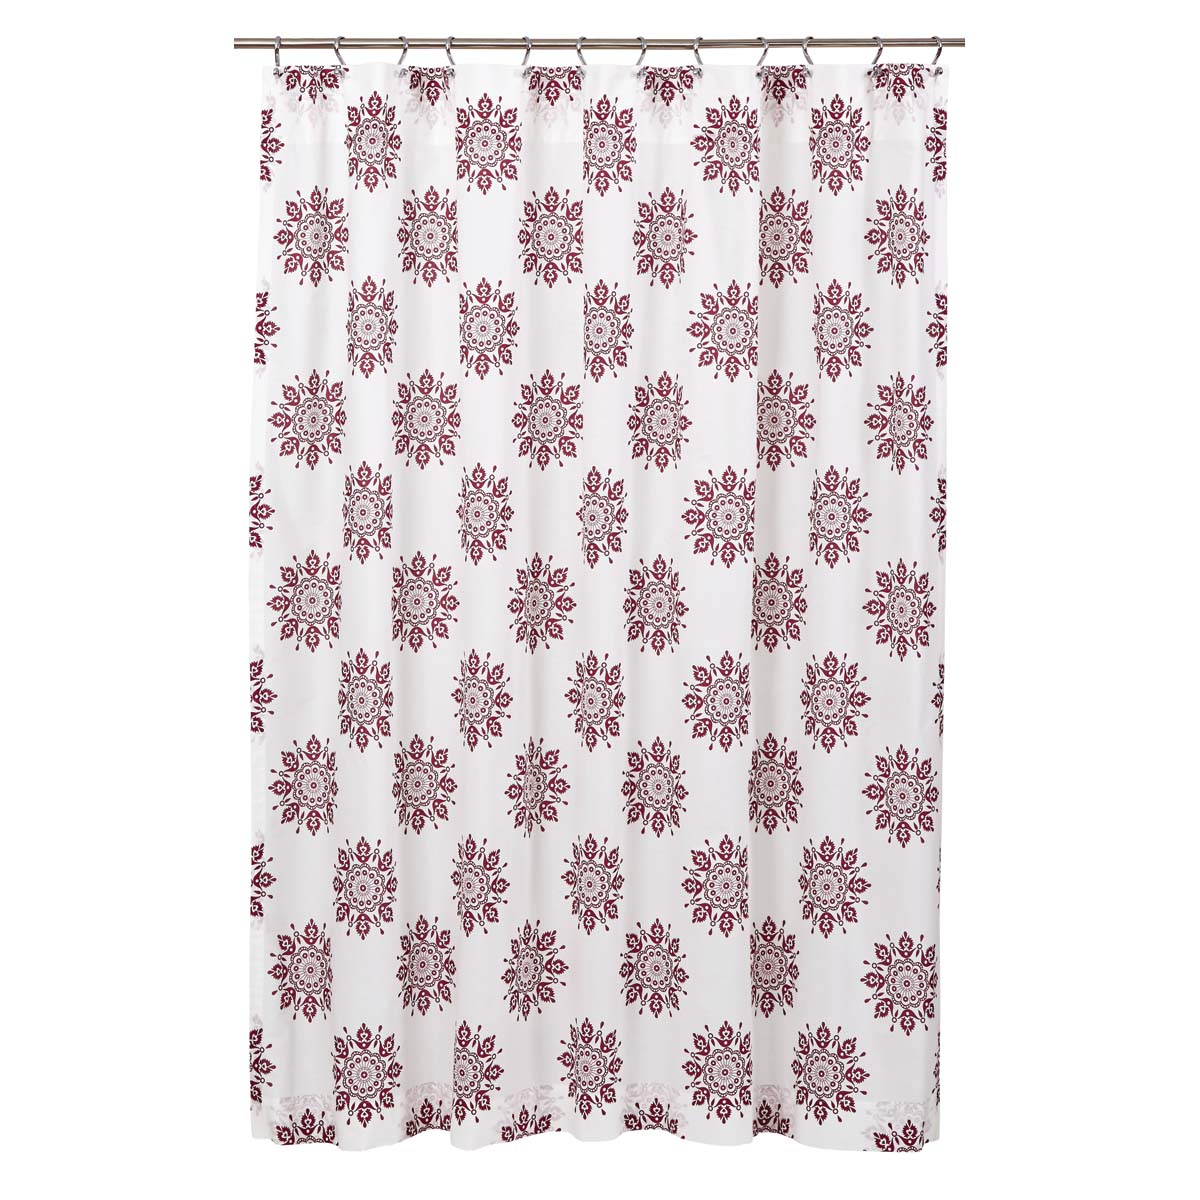 VHC Coastal 100% Cotton Fabric Shower Curtain Bath Room White Floral 72 x 72 